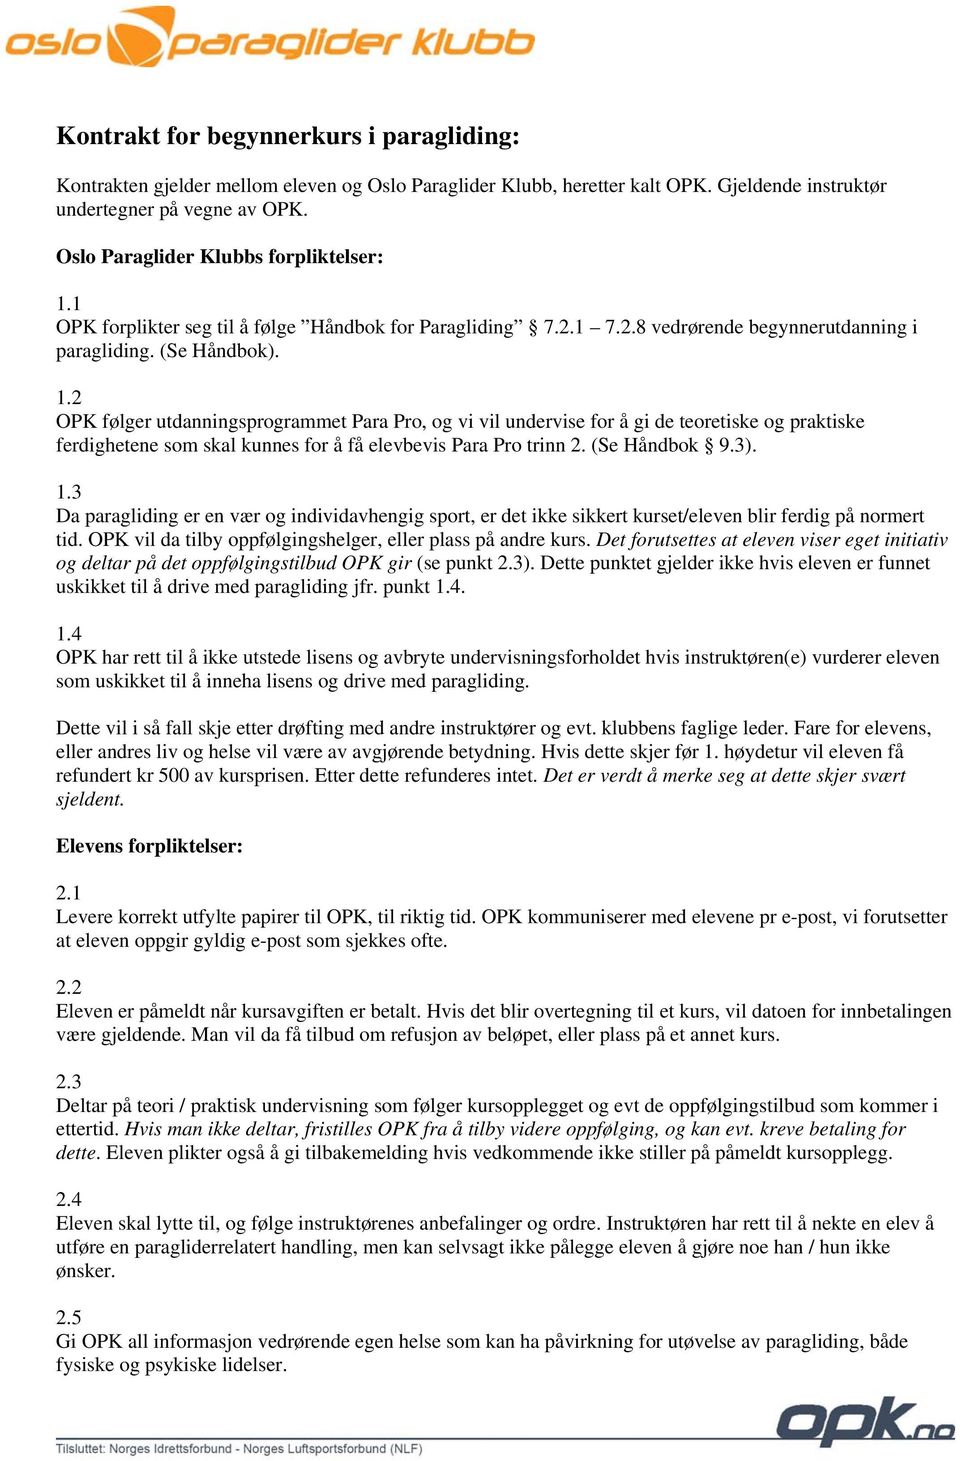 1 OPK forplikter seg til å følge Håndbok for Paragliding 7.2.1 7.2.8 vedrørende begynnerutdanning i paragliding. (Se Håndbok). 1.